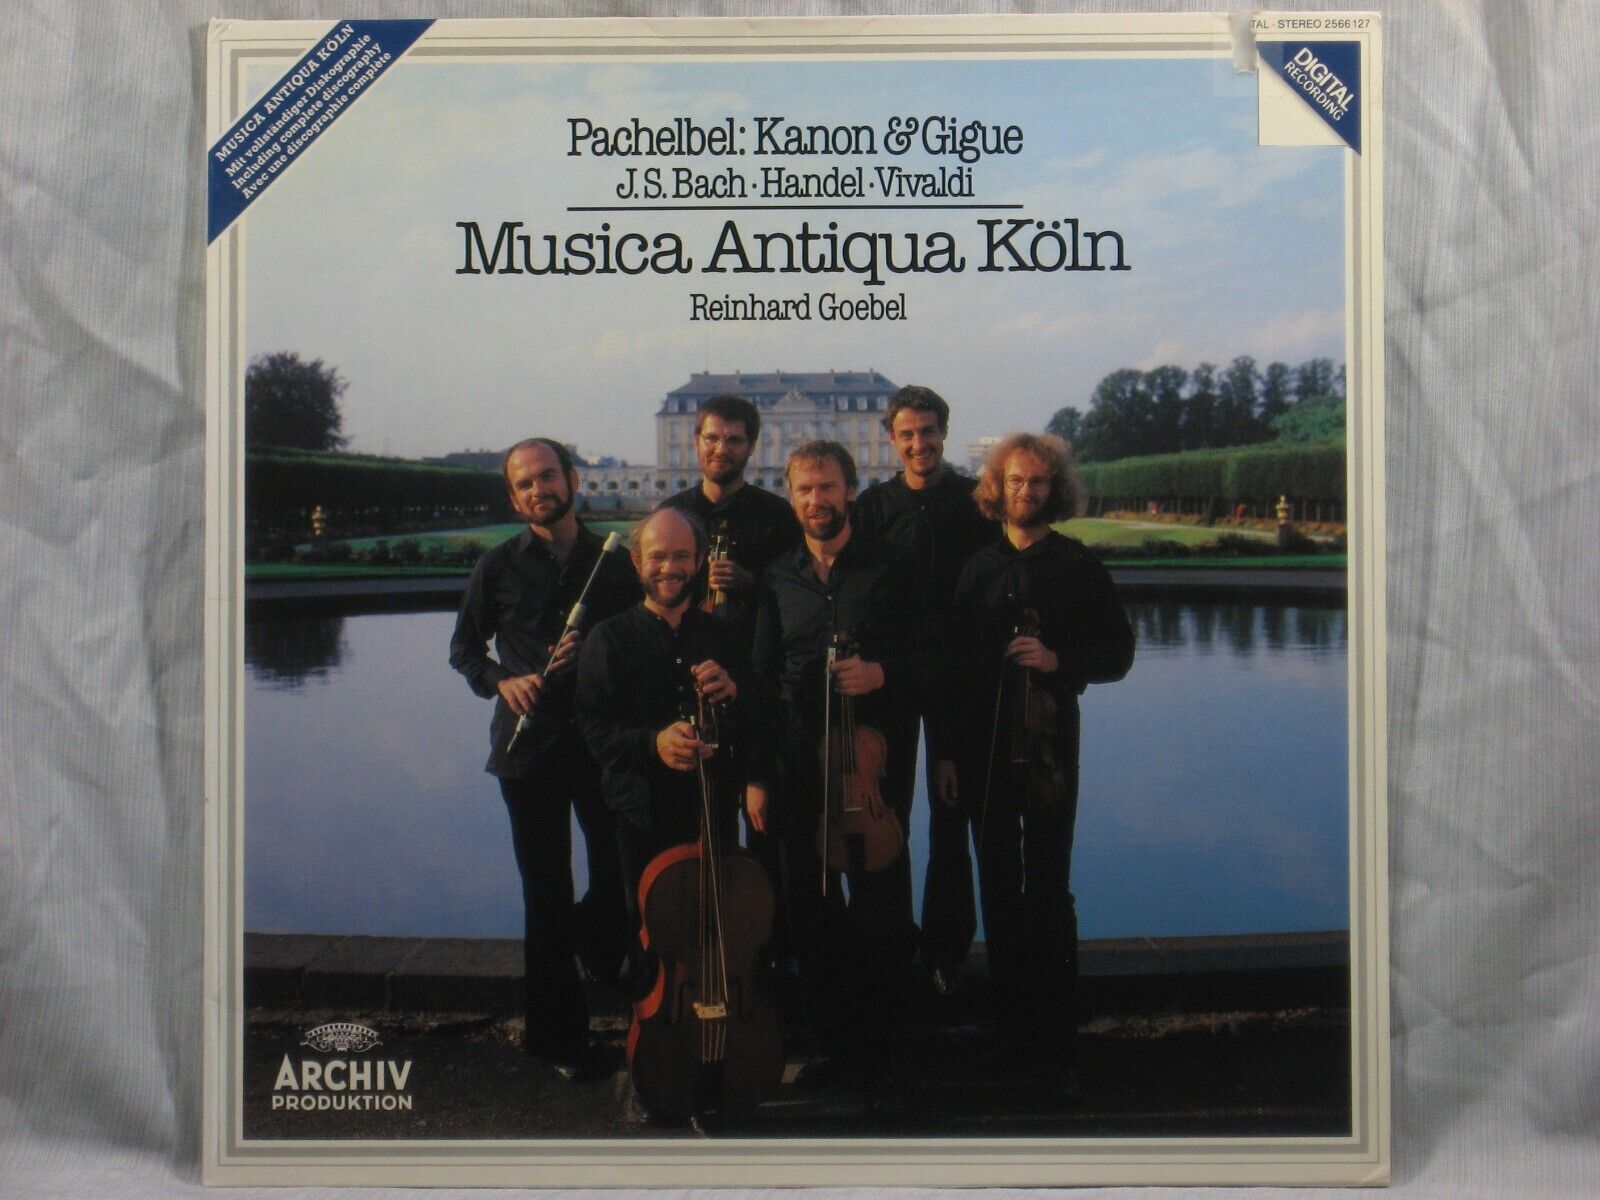 Musica Antiqua Köln - Pachelbel/Bach/Handel/Vivaldi - AP 2566 127